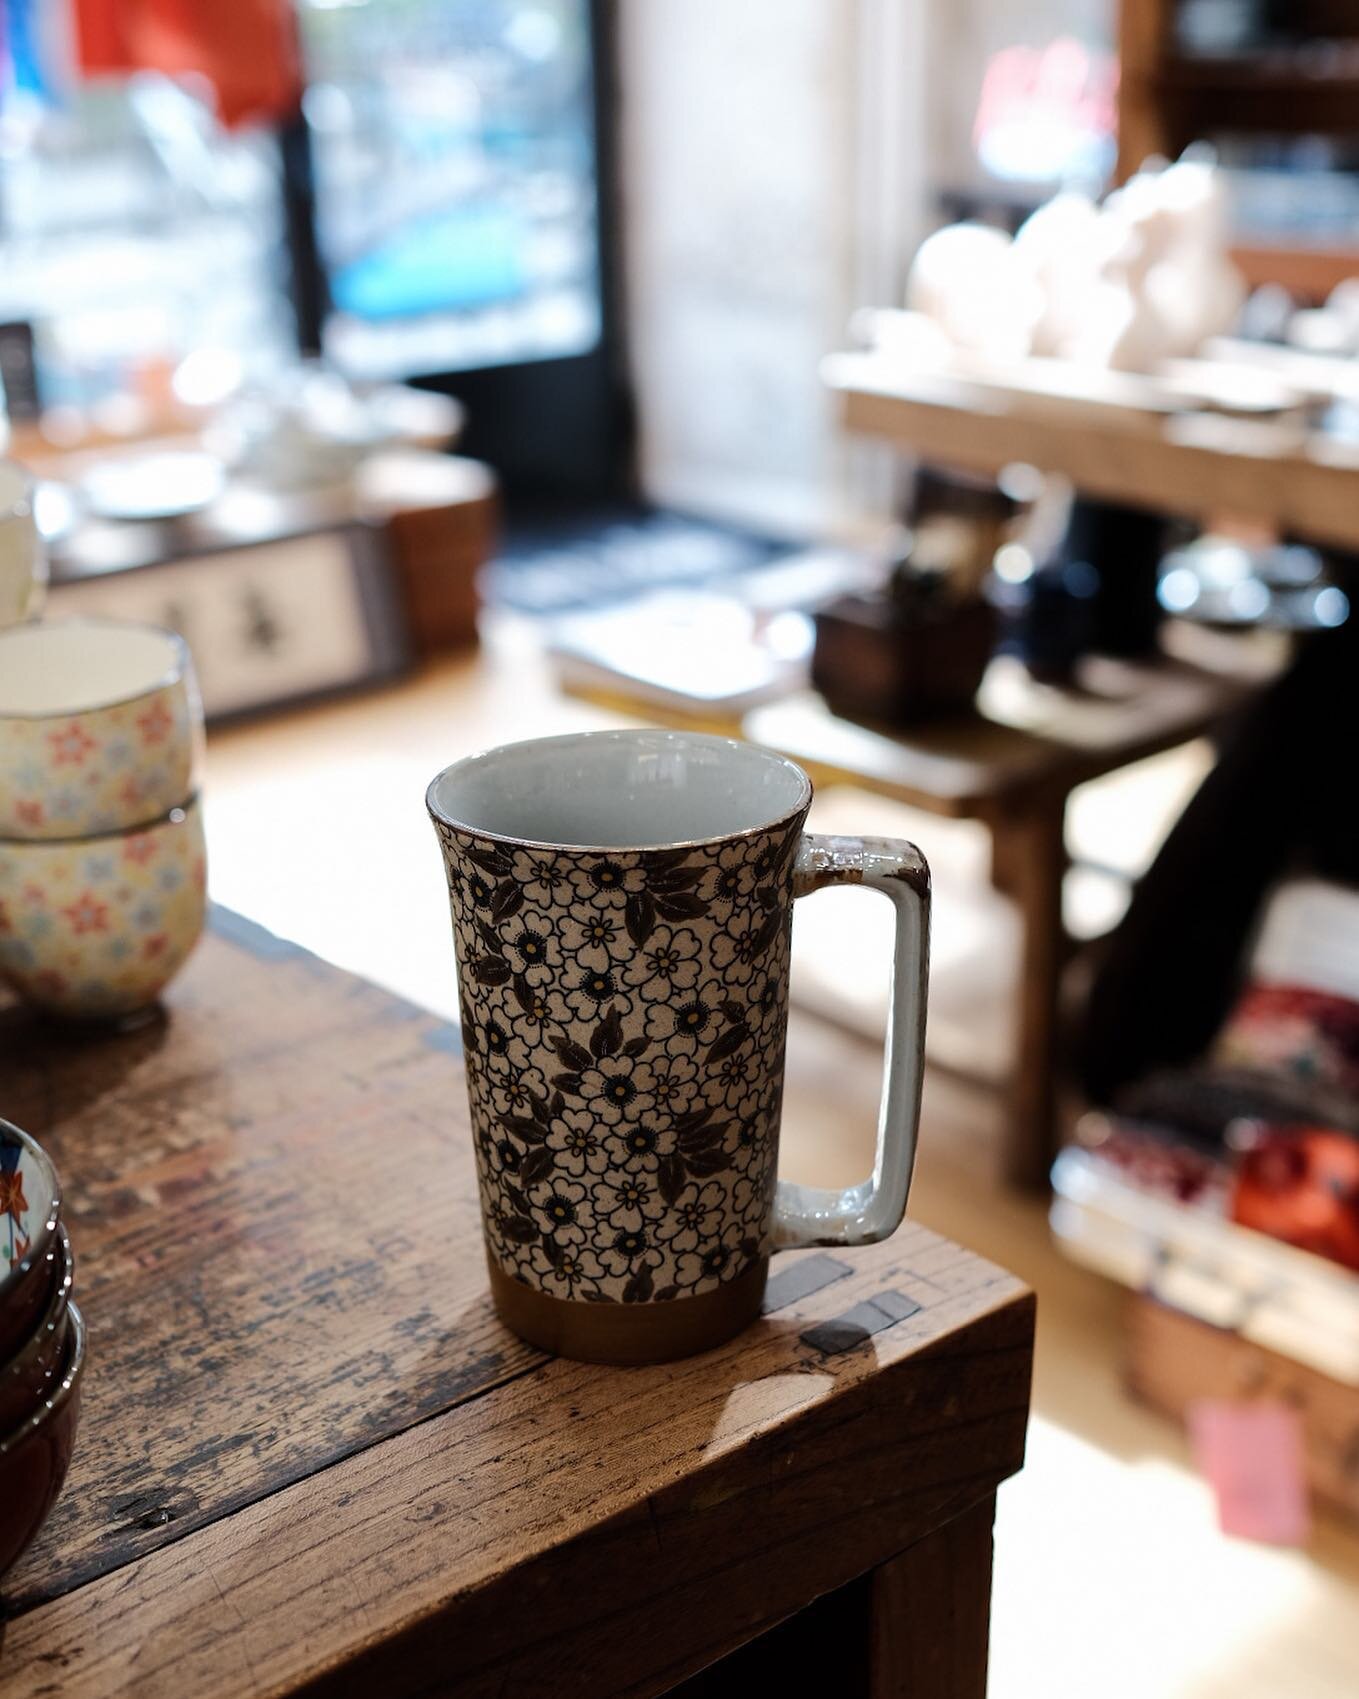 Our best seller, we have nice collection of Japanese mug.
.
#supplier #b2b #fournisseur #distibuteur #factory #direct #ceramics #porcelain #artdelatable #vaisselle #japonais #collection #mug #japanesemugs #homeware #tableware #yugenlab #trade